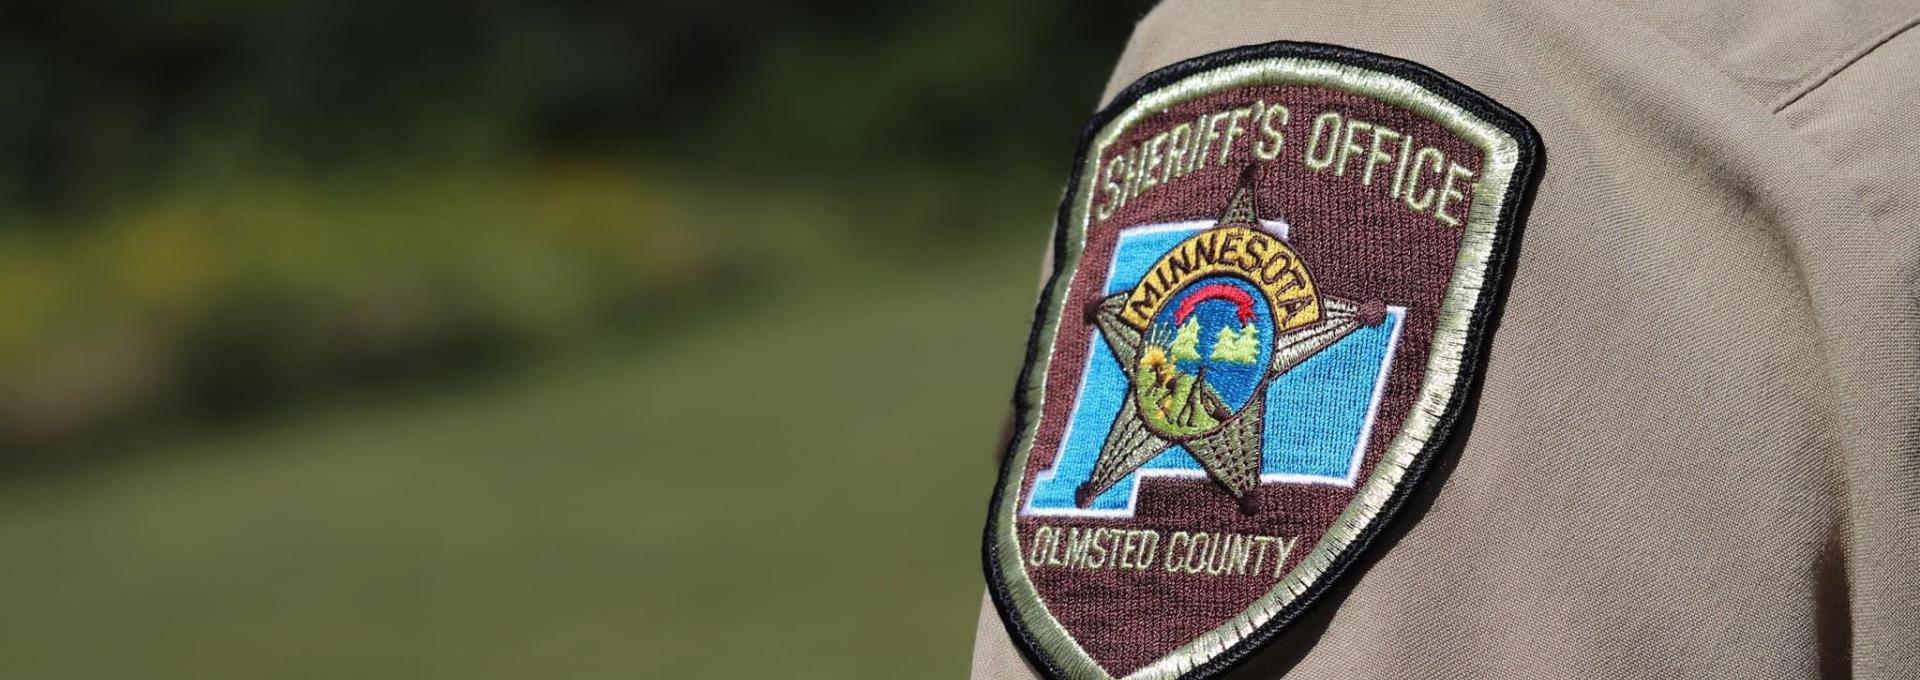 Sheriff's Office uniform patch on sleeve